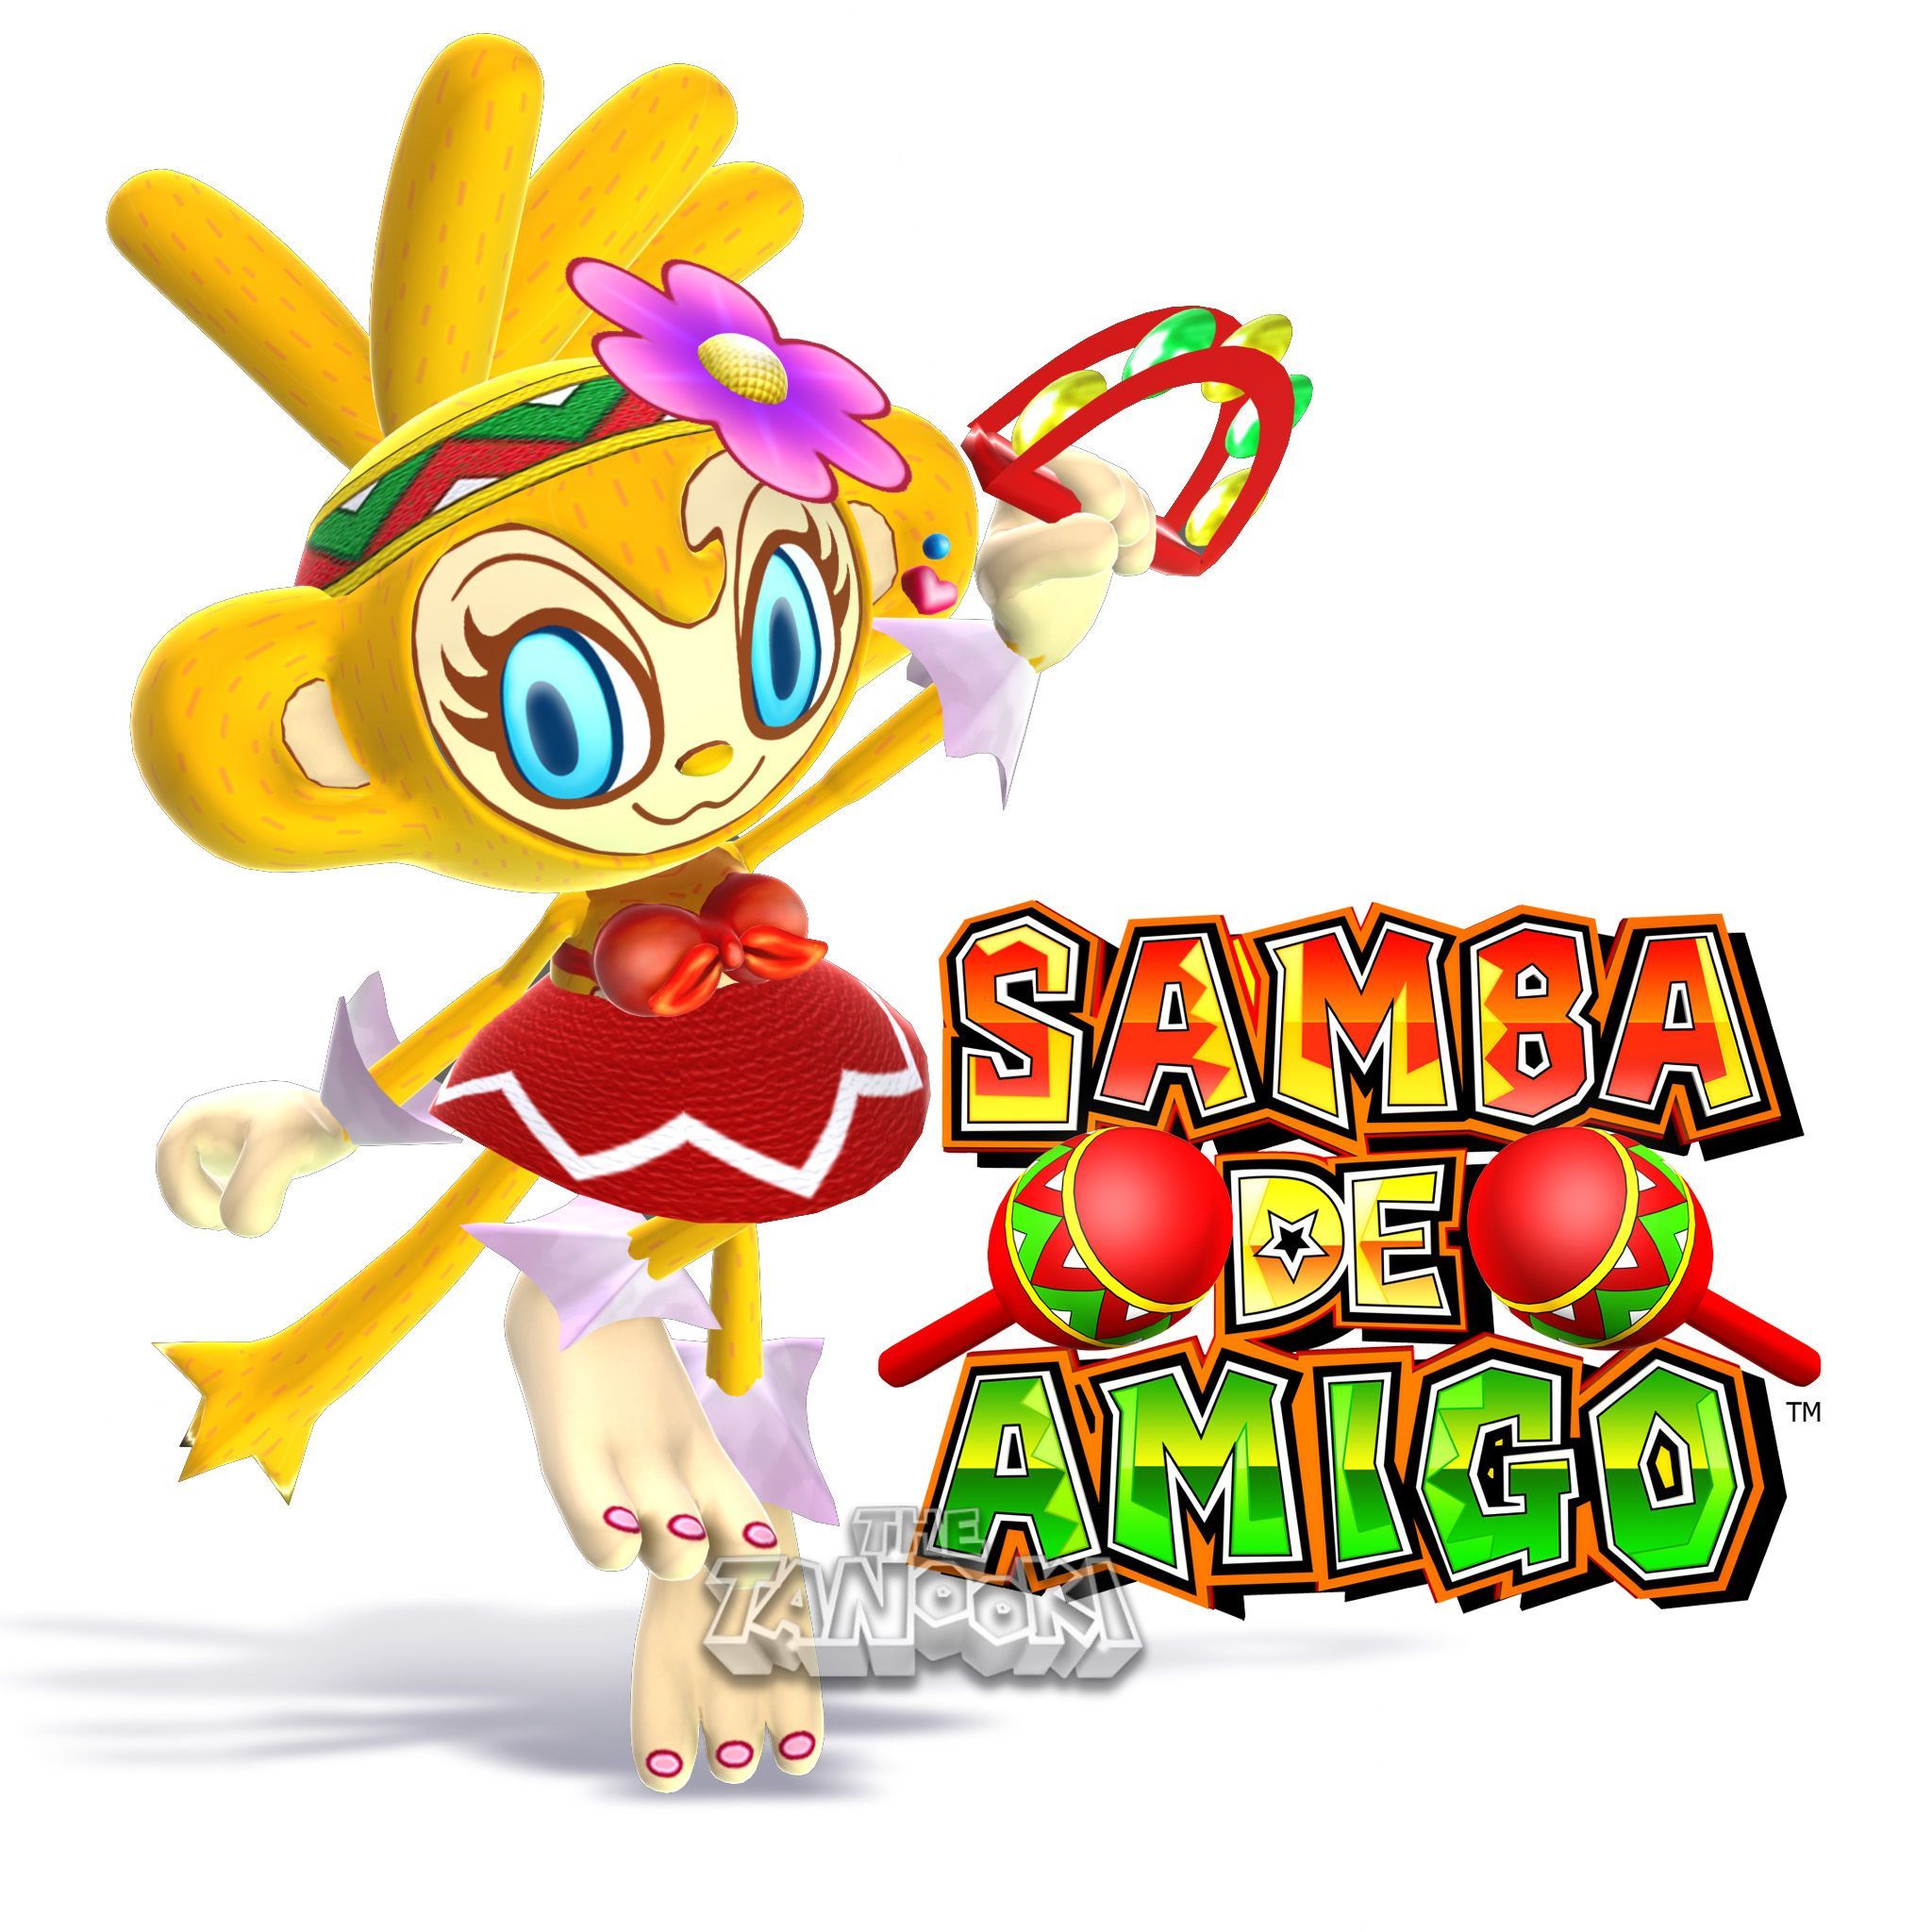 Amiga De Amigo, Samba's sister. Video game companies